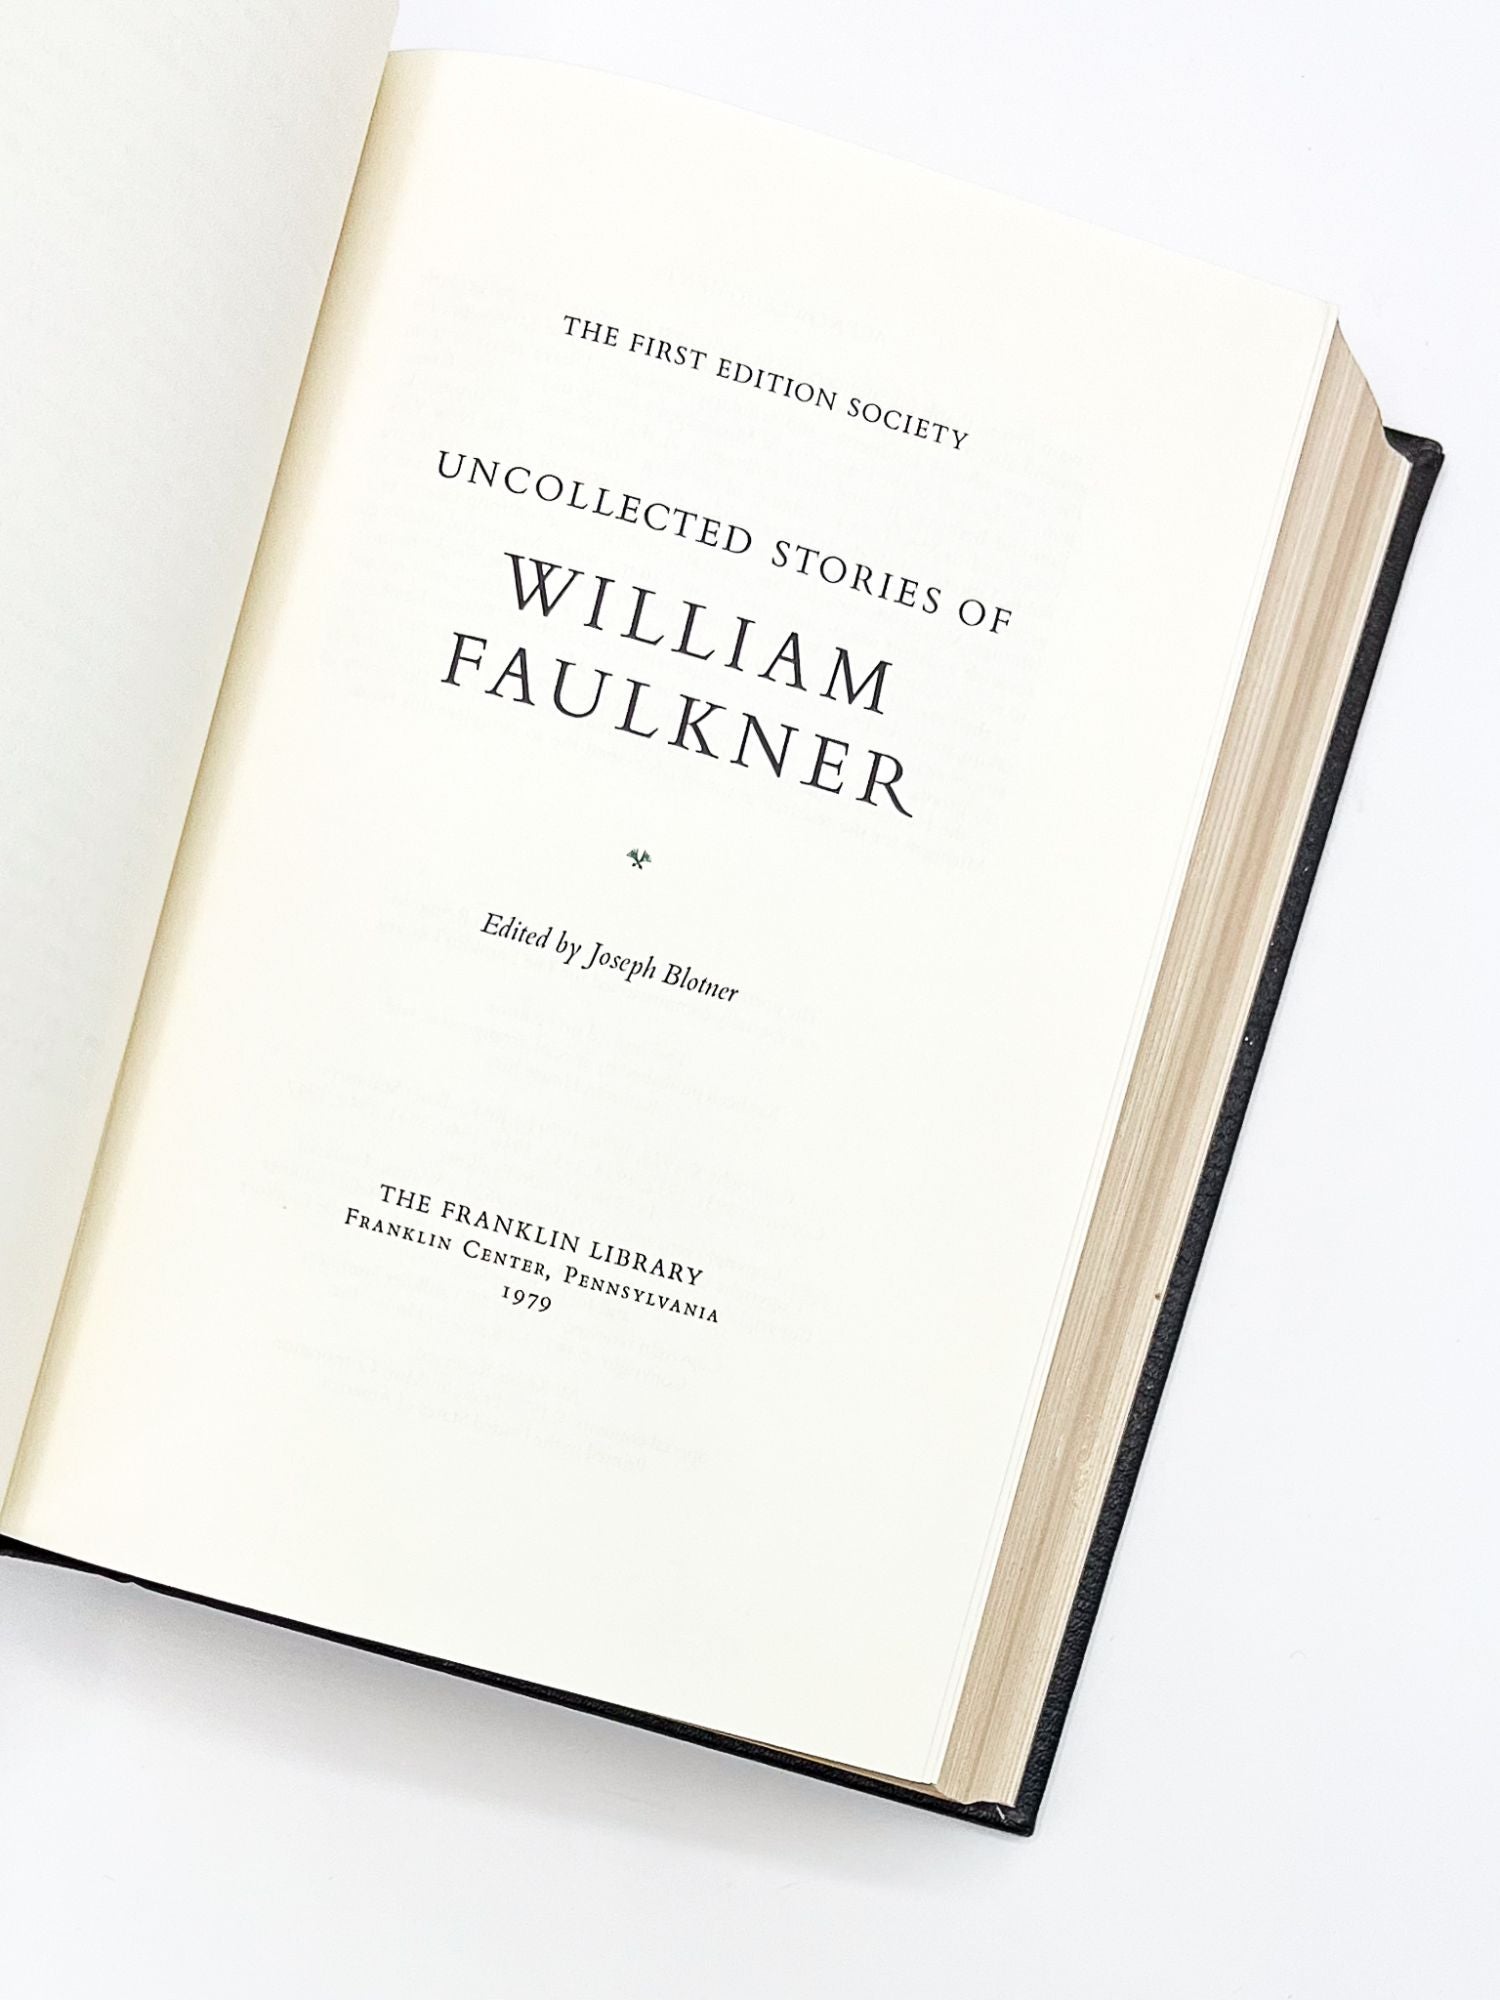 UNCOLLECTED STORIES OF WILLIAM FAULKNER by William Faulkner, Joseph Blotner  on Type Punch Matrix